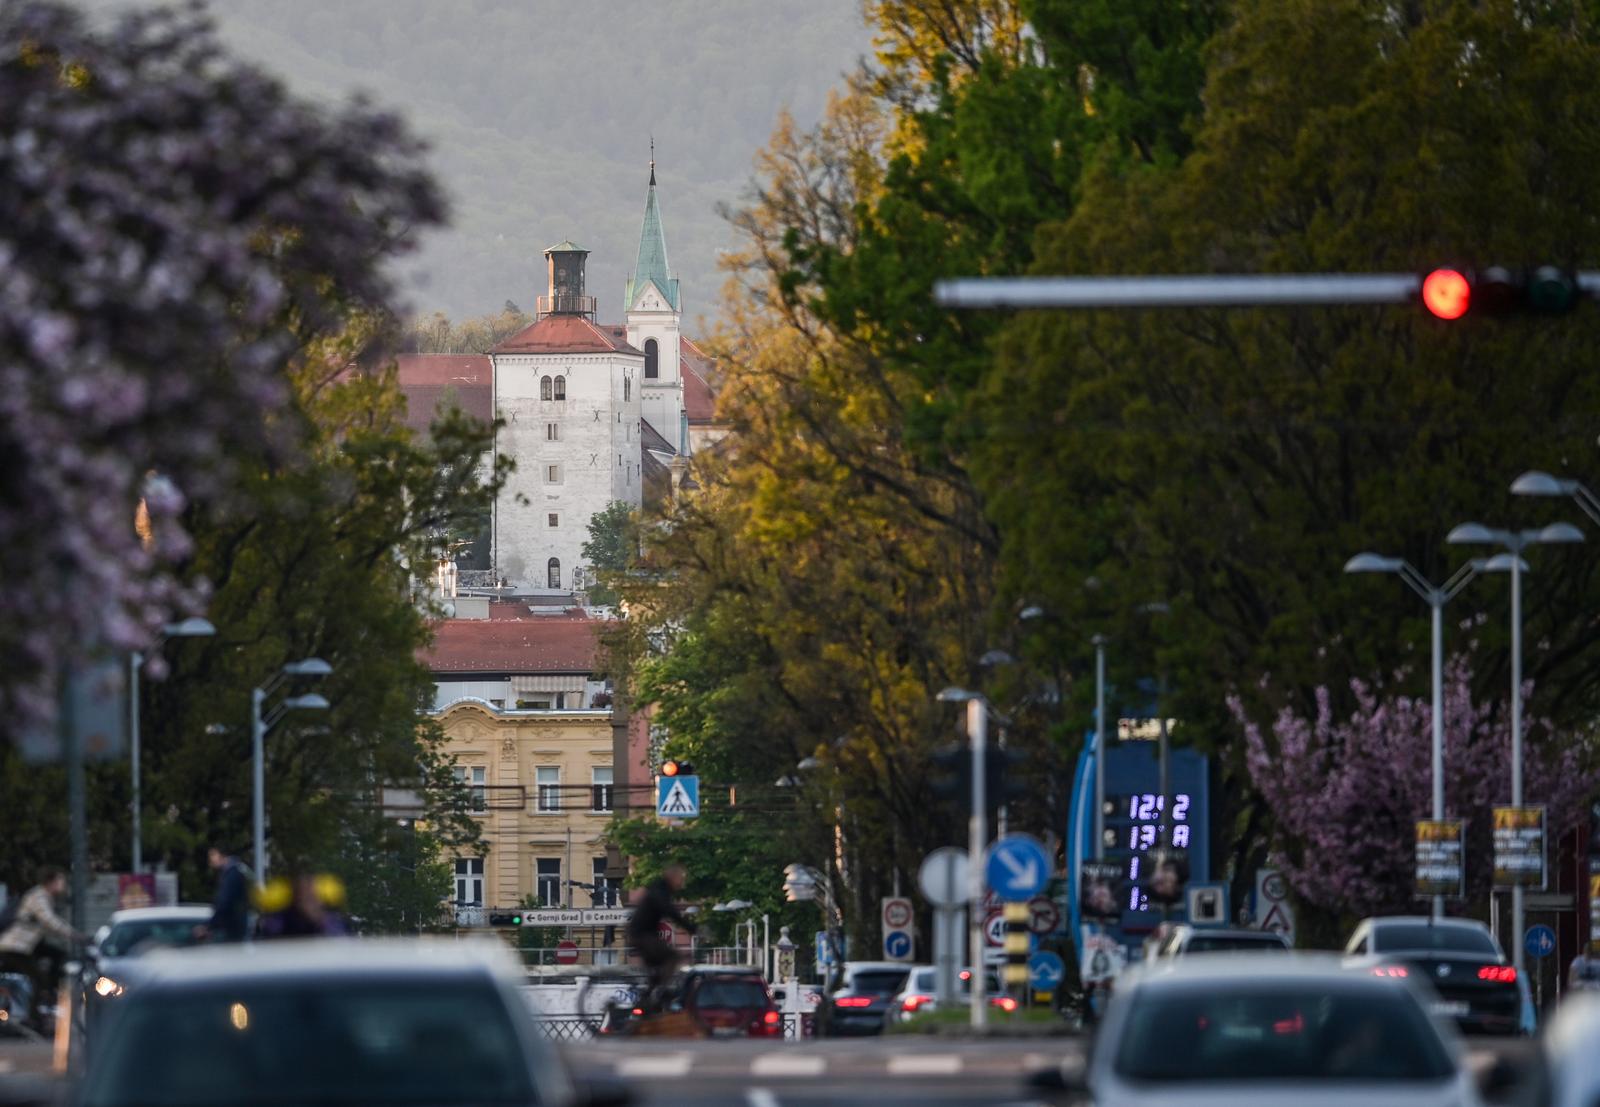 14.04.2022., Zagreb, - Lijep proljetan dan u Zagrebu uz Kulu Lotrscak u pozadini. Photo: Igor Soban/PIXSELL